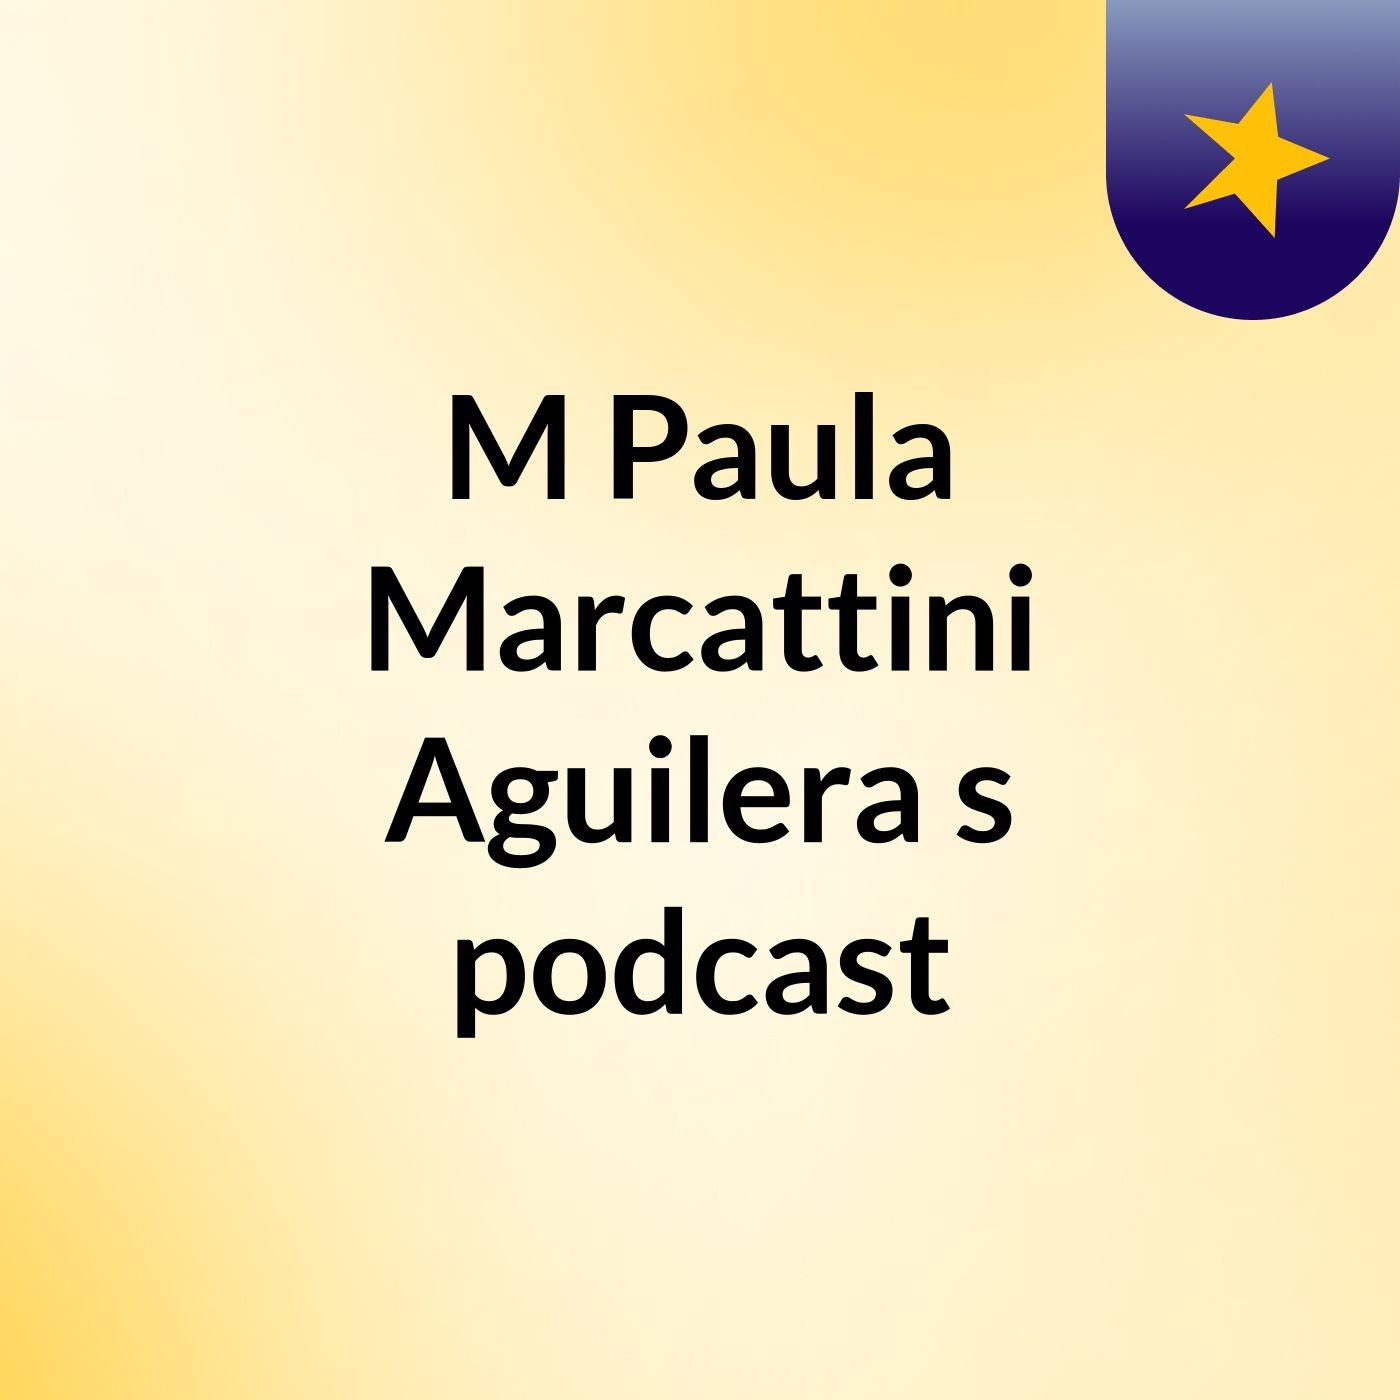 M Paula Marcattini Aguilera's podcast